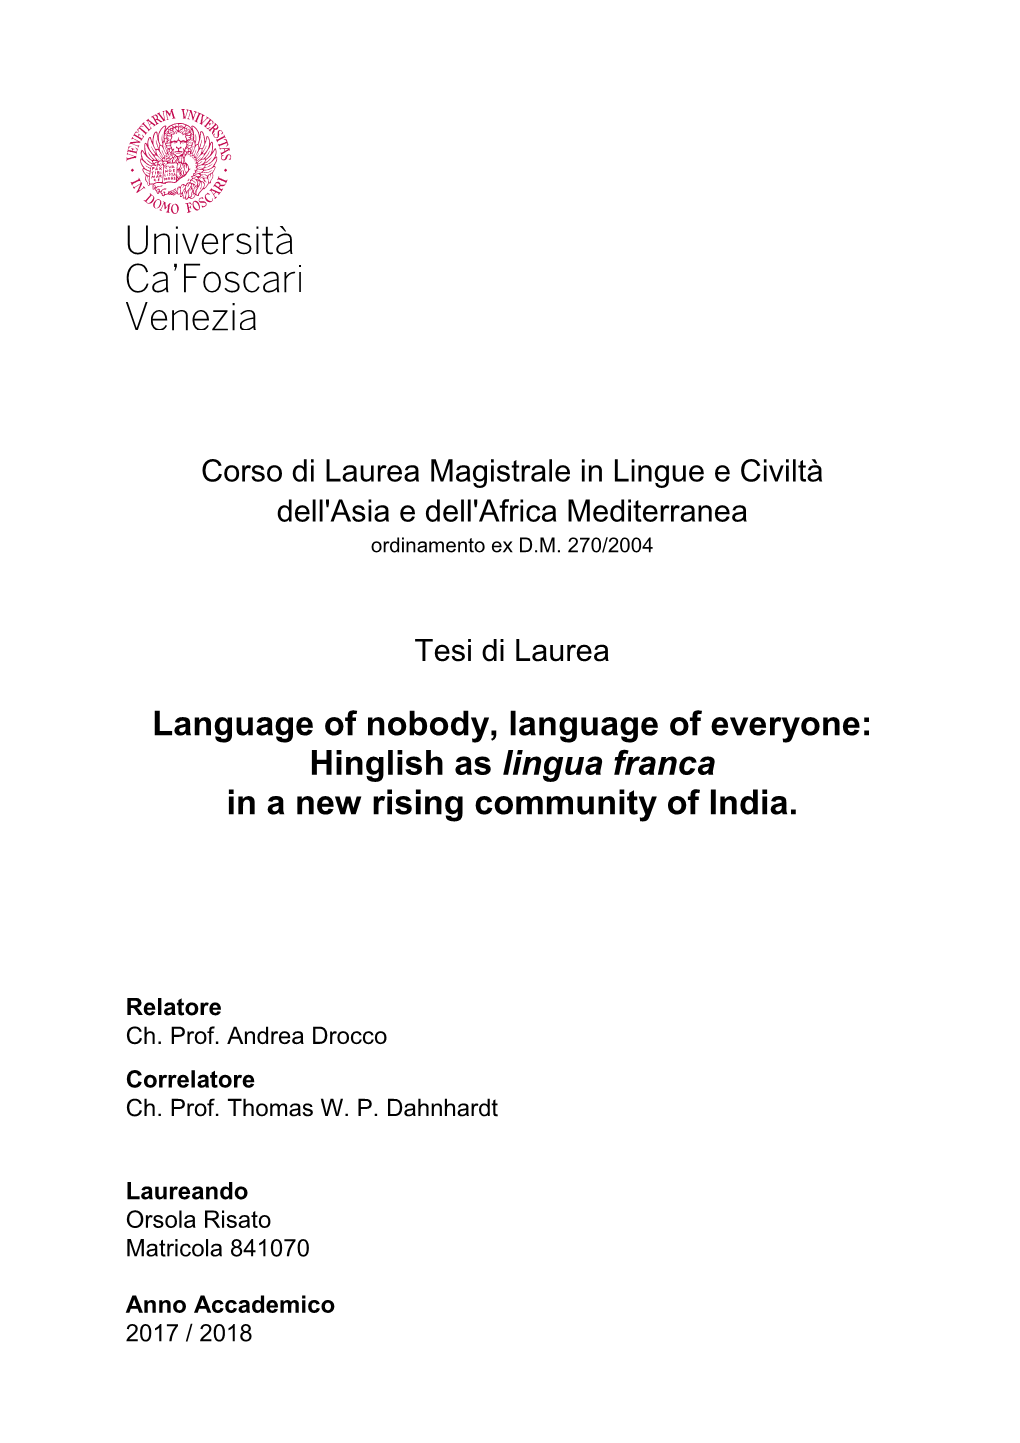 Hinglish As Lingua Franca in a New Rising Community of India